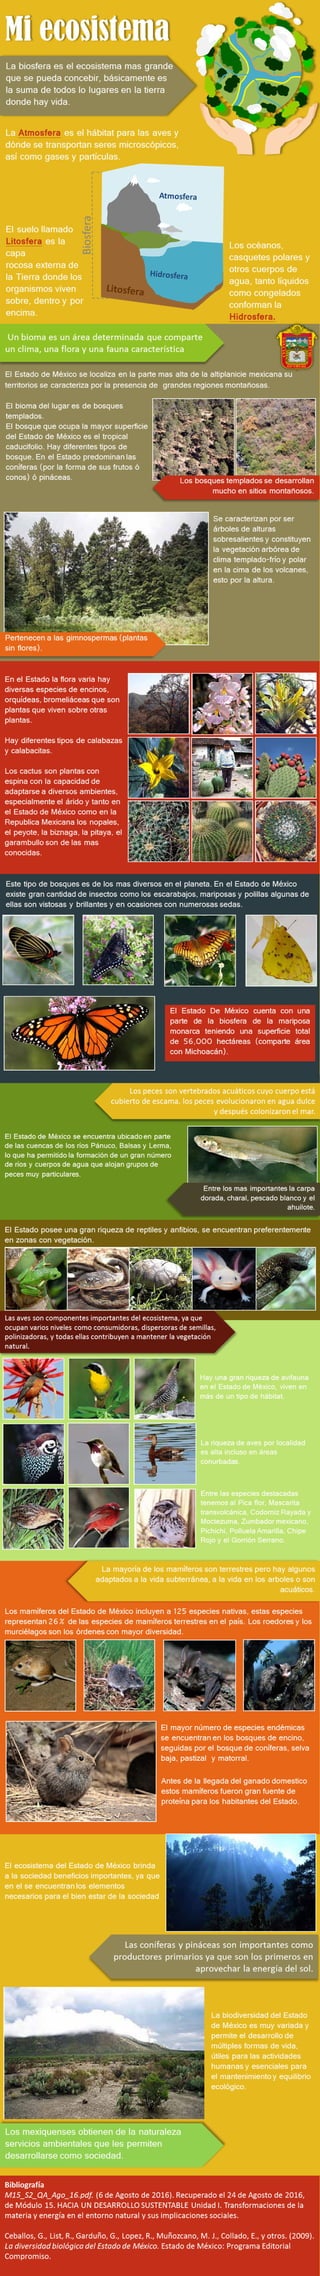 Infografia ecosistema-estado-de-mexico montserrat-gonzalez